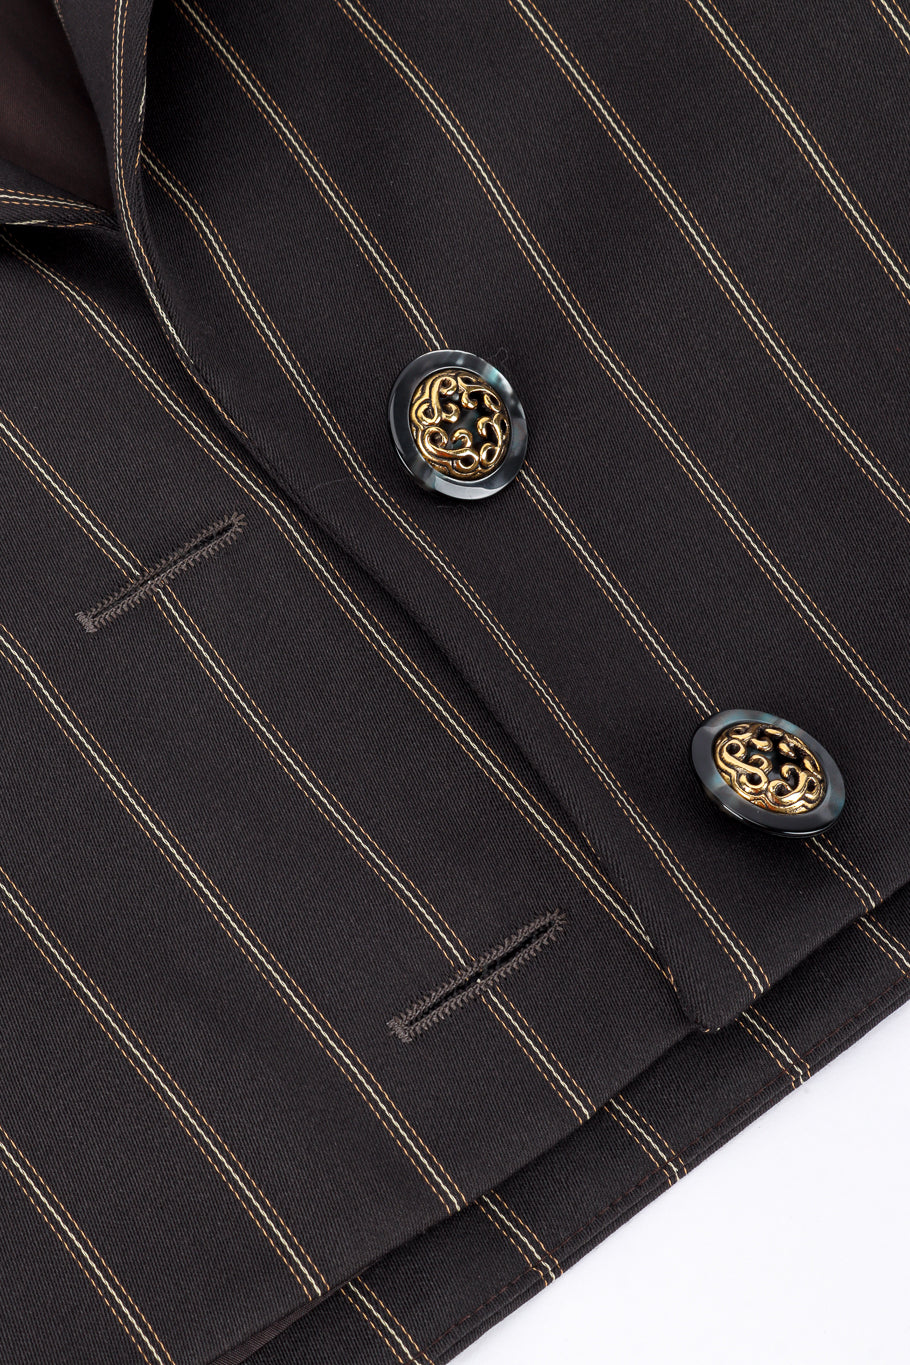 Vintage Byblos Cropped Pinstripe Jacket front button closure @recess la